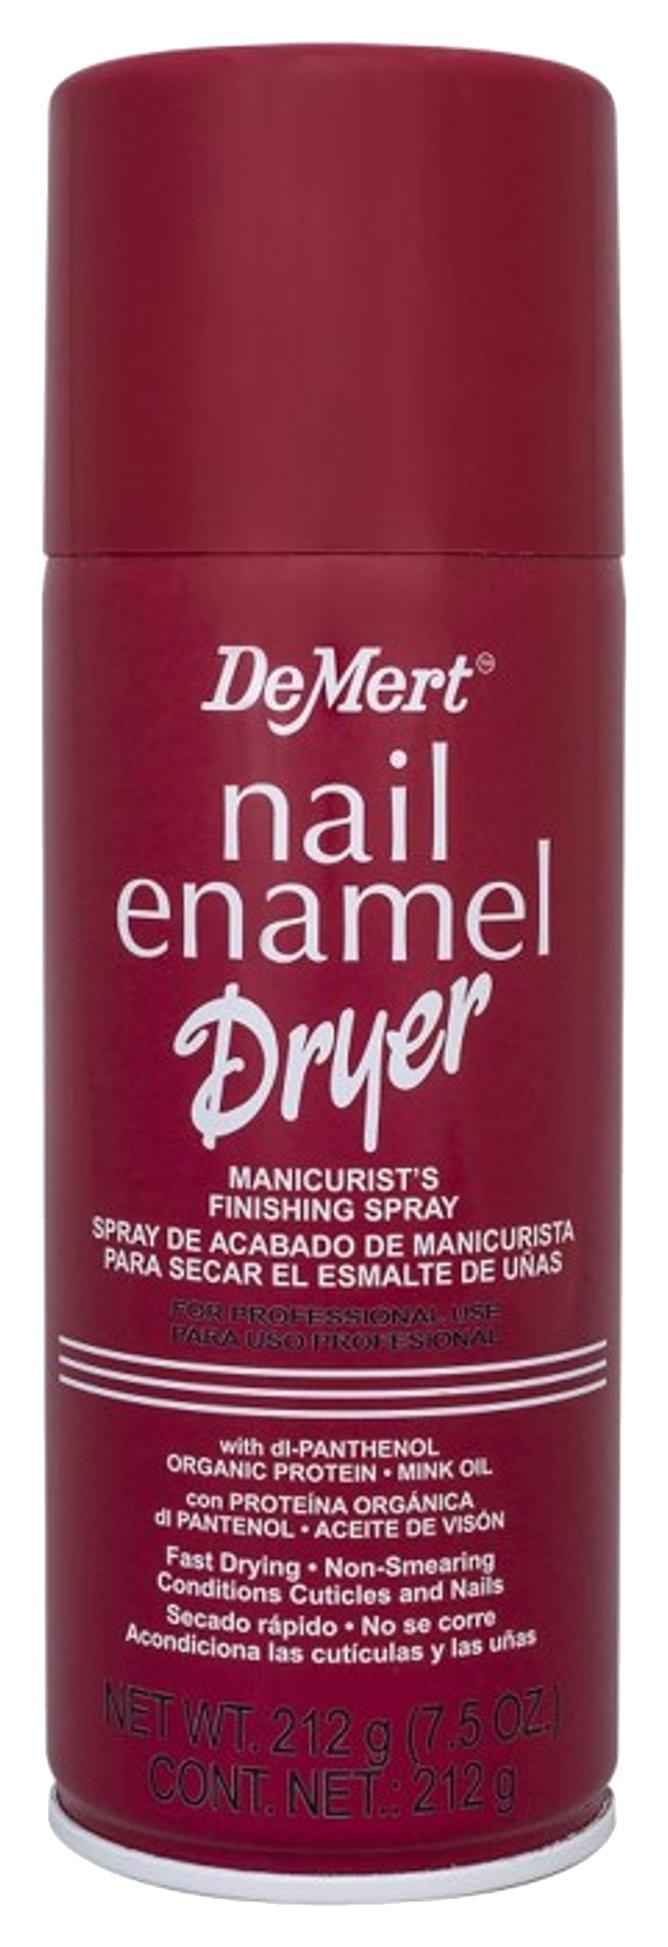 7.5 Oz. Nail Enamel Dryer Manicure Finishing Spray